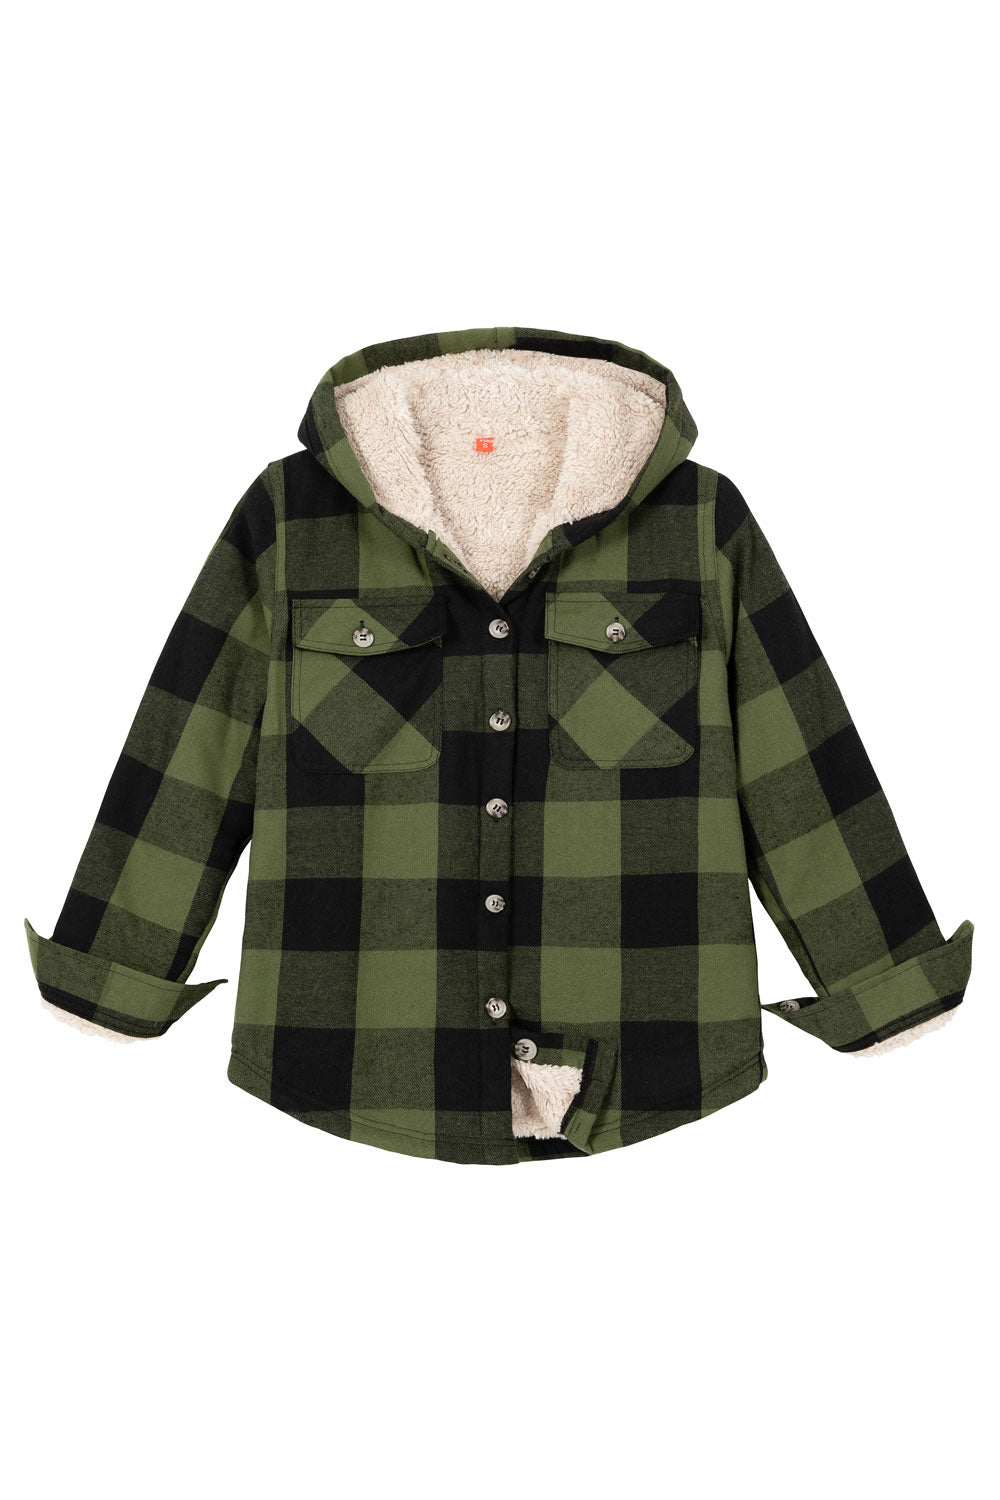 Boys Sherpa Lined Flannel Plaid Shirt Jacket,Hooded Flannel Jacket Kids